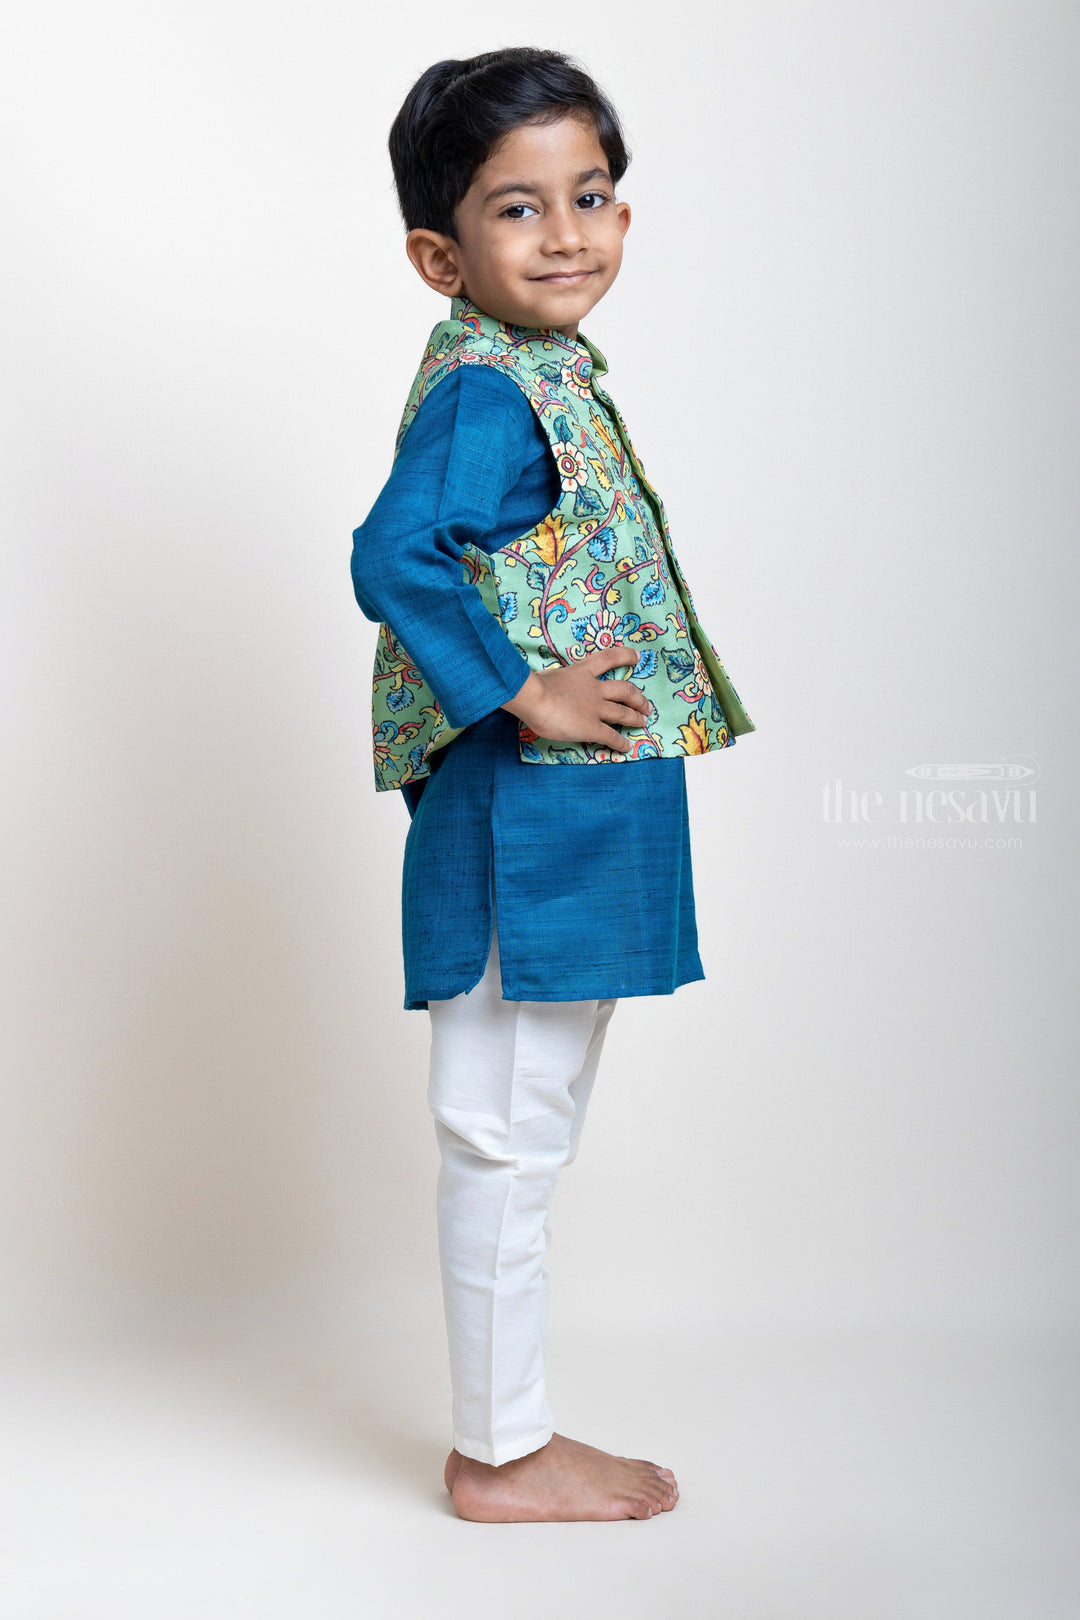 The Nesavu Boys Jacket Sets Dark Blue Cotton Kurta For Boys With A Light Green Digital Floral Prints Jacket psr silks Nesavu